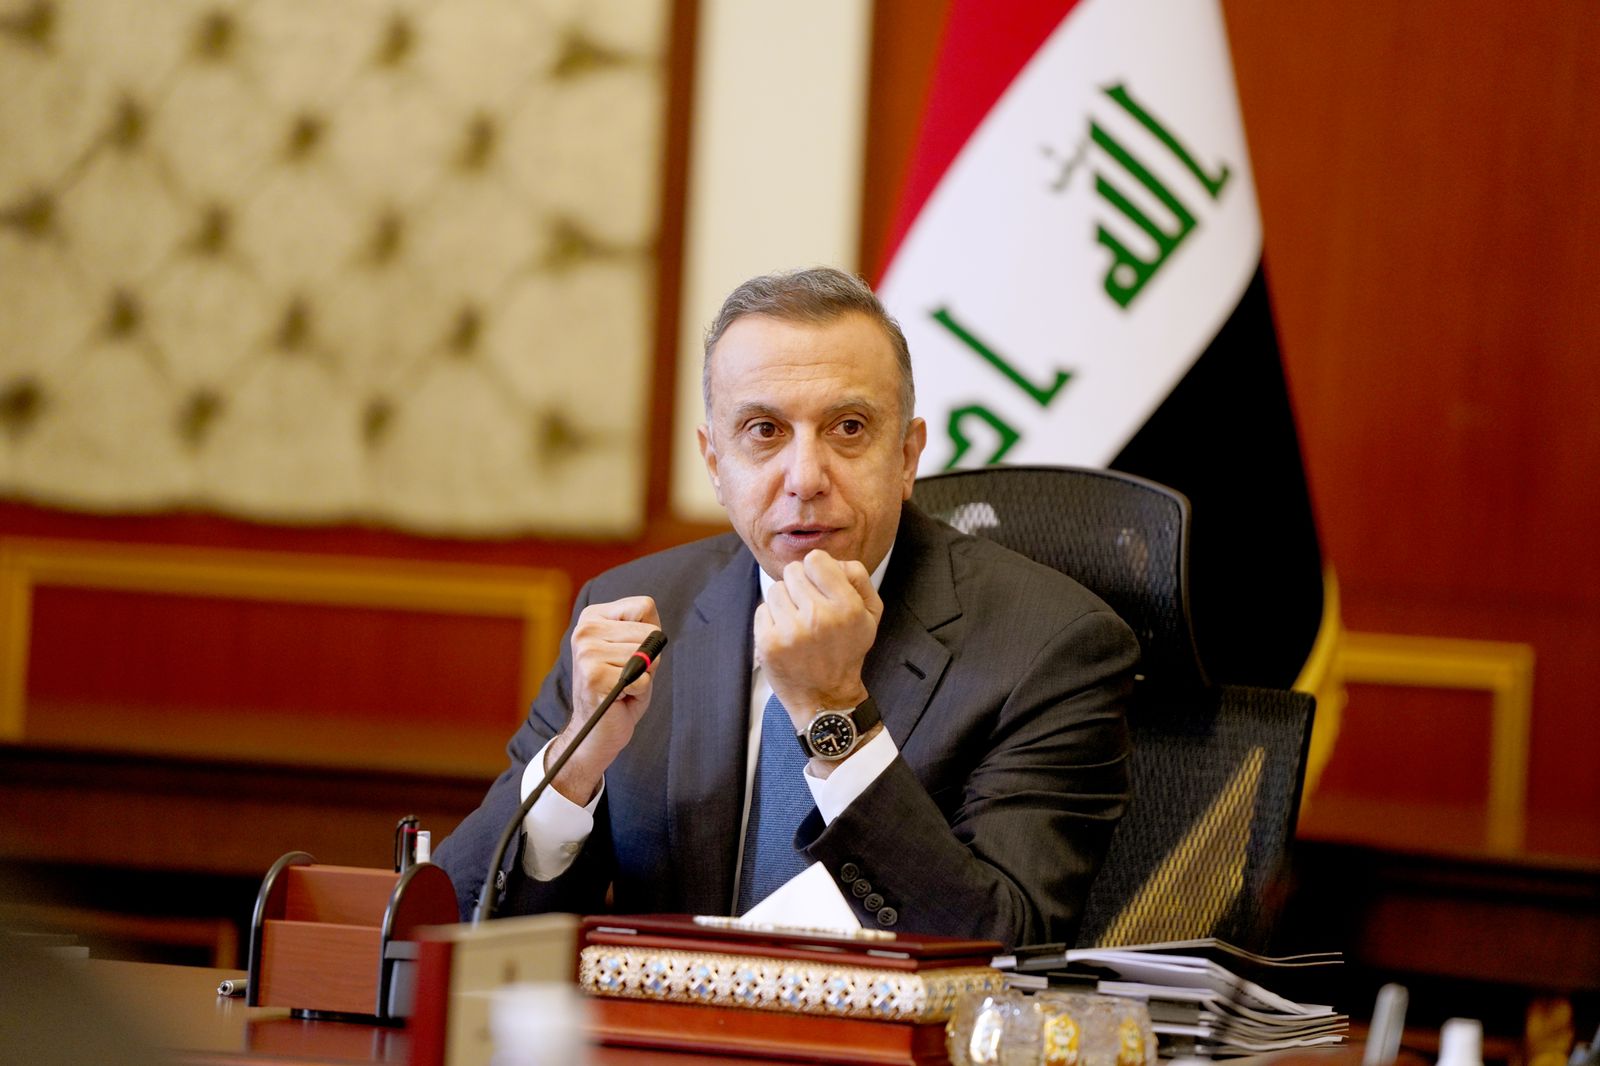 Al-Kadhimi lambasts the recent rocket attacks against Iraqi military bases